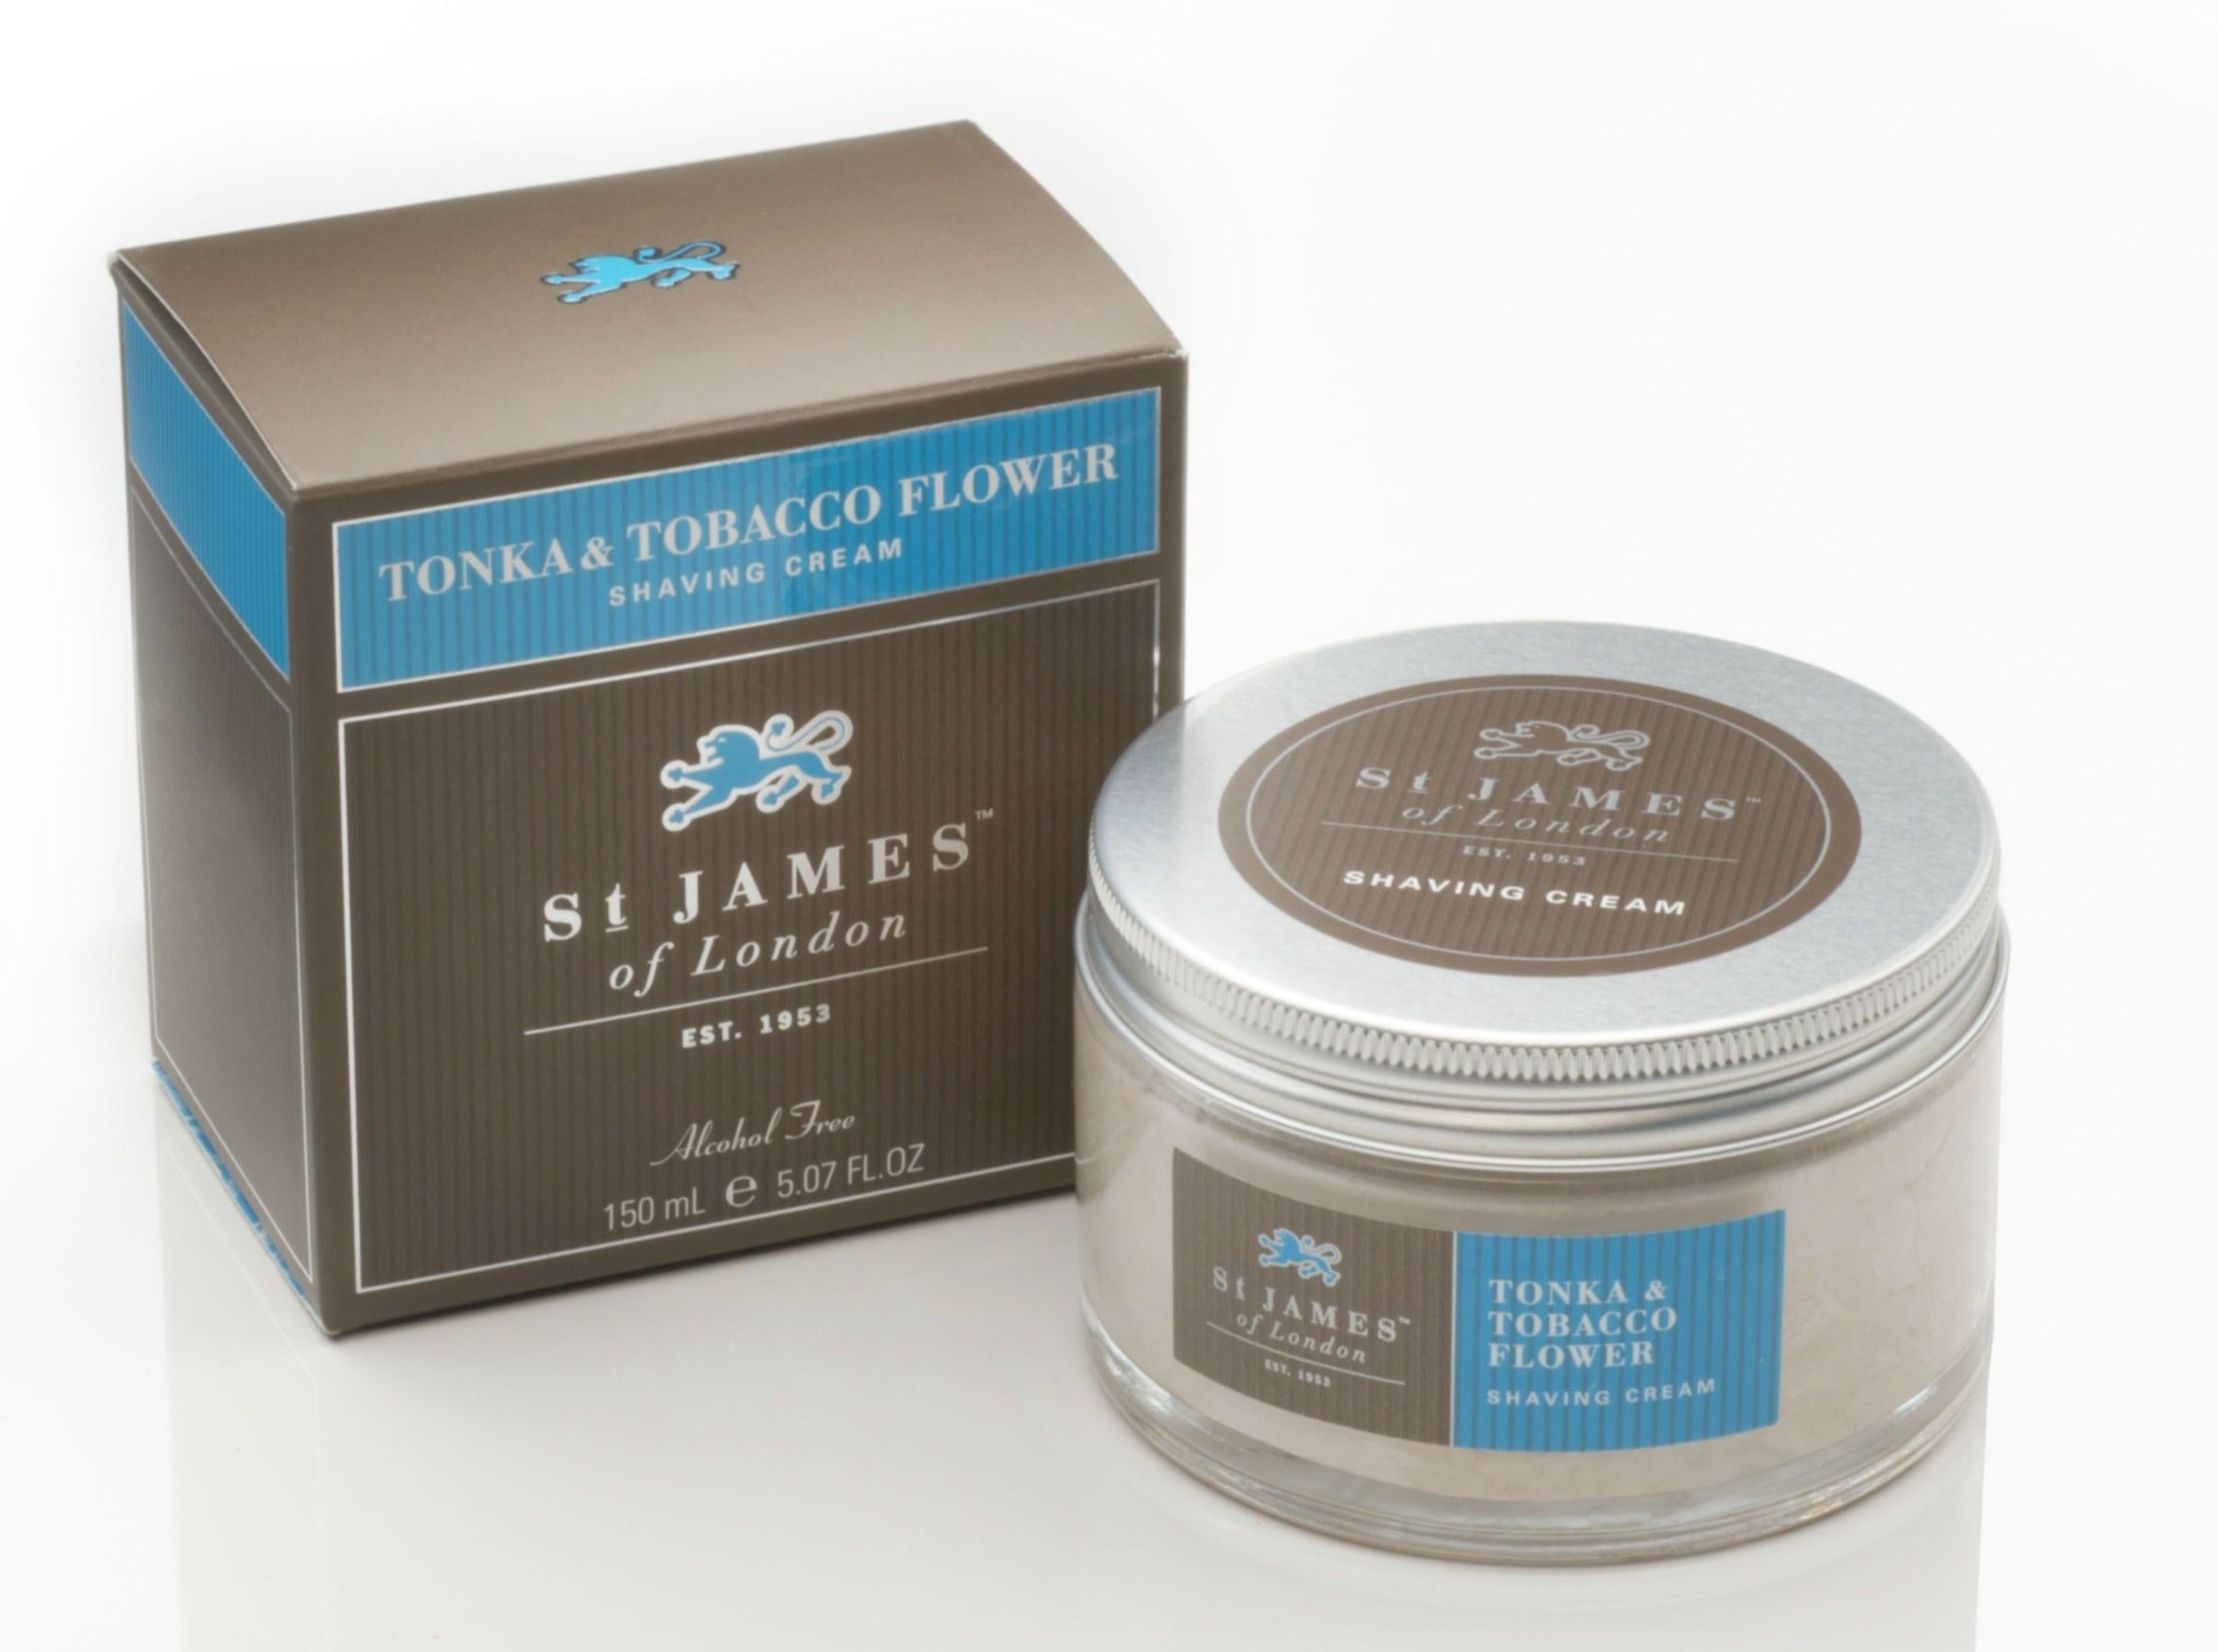 Tonka & Tabacco Flower Shave Cream Jar (4435859537974)